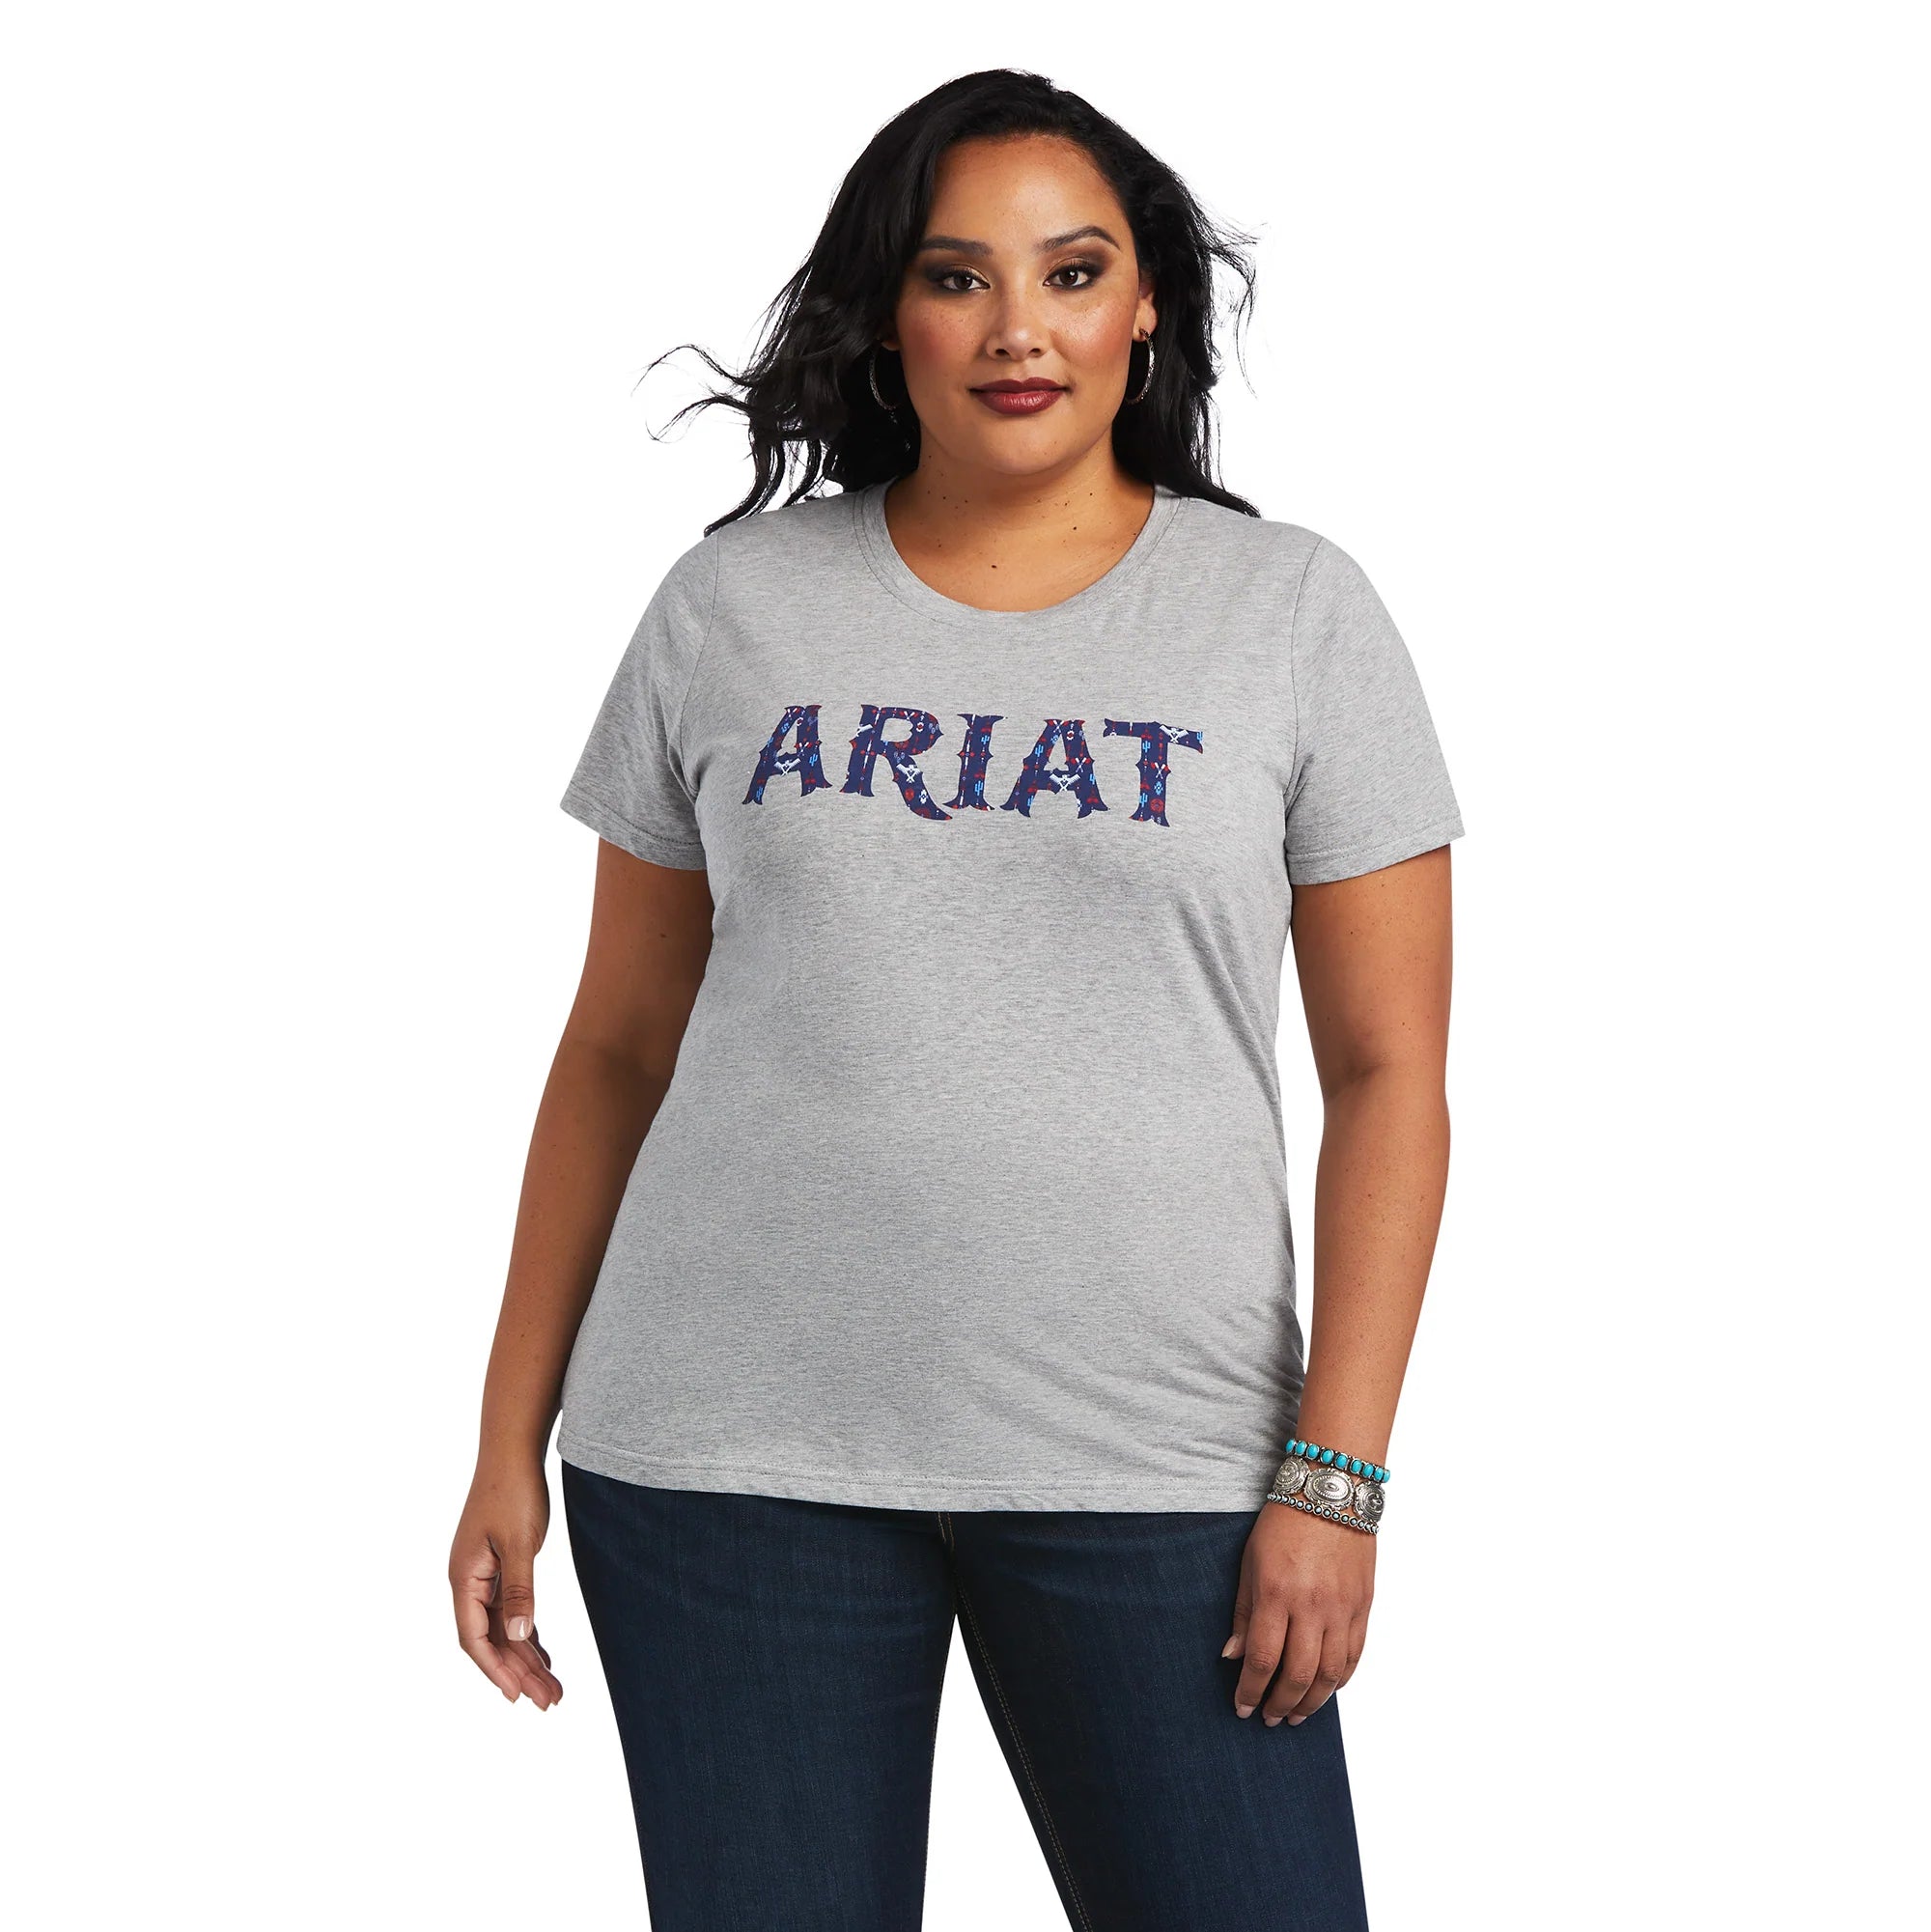 Womens Ariat REAL Tribal Lore Tee Tshirt - Heather Grey (6832134225997)